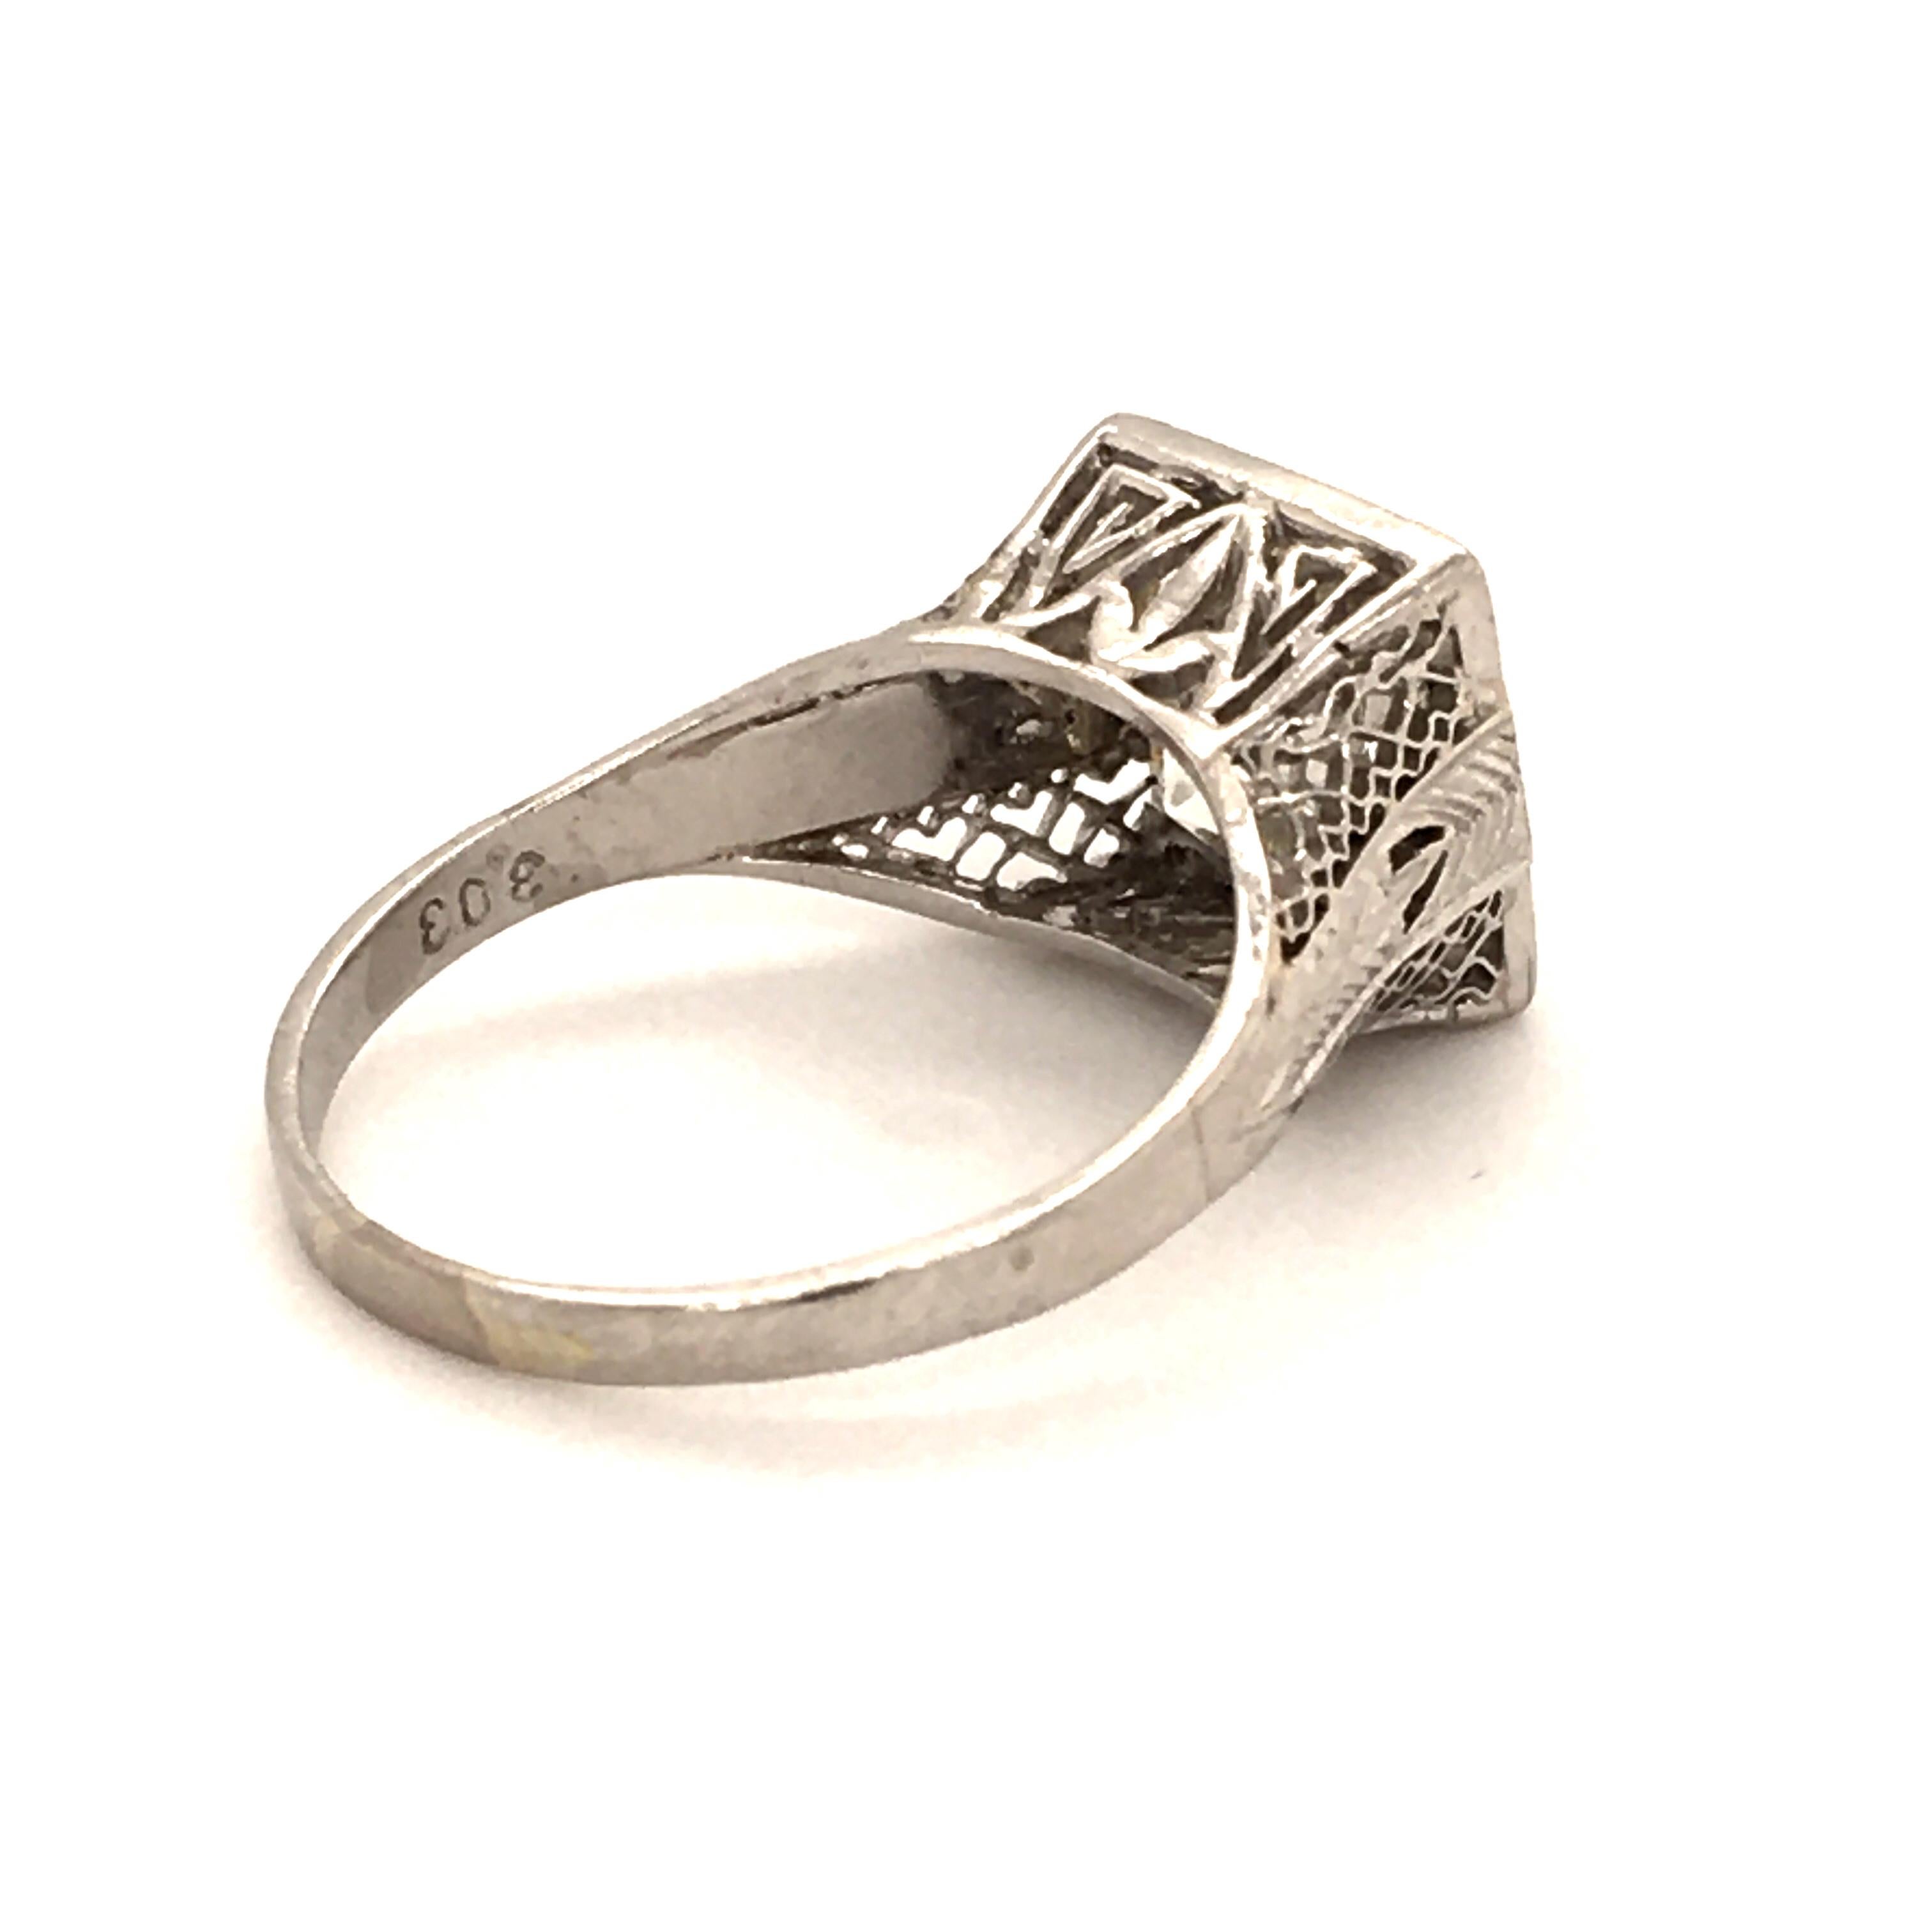 Women's or Men's Antique GIA Certified Old Cut Diamond Ring in Platinum